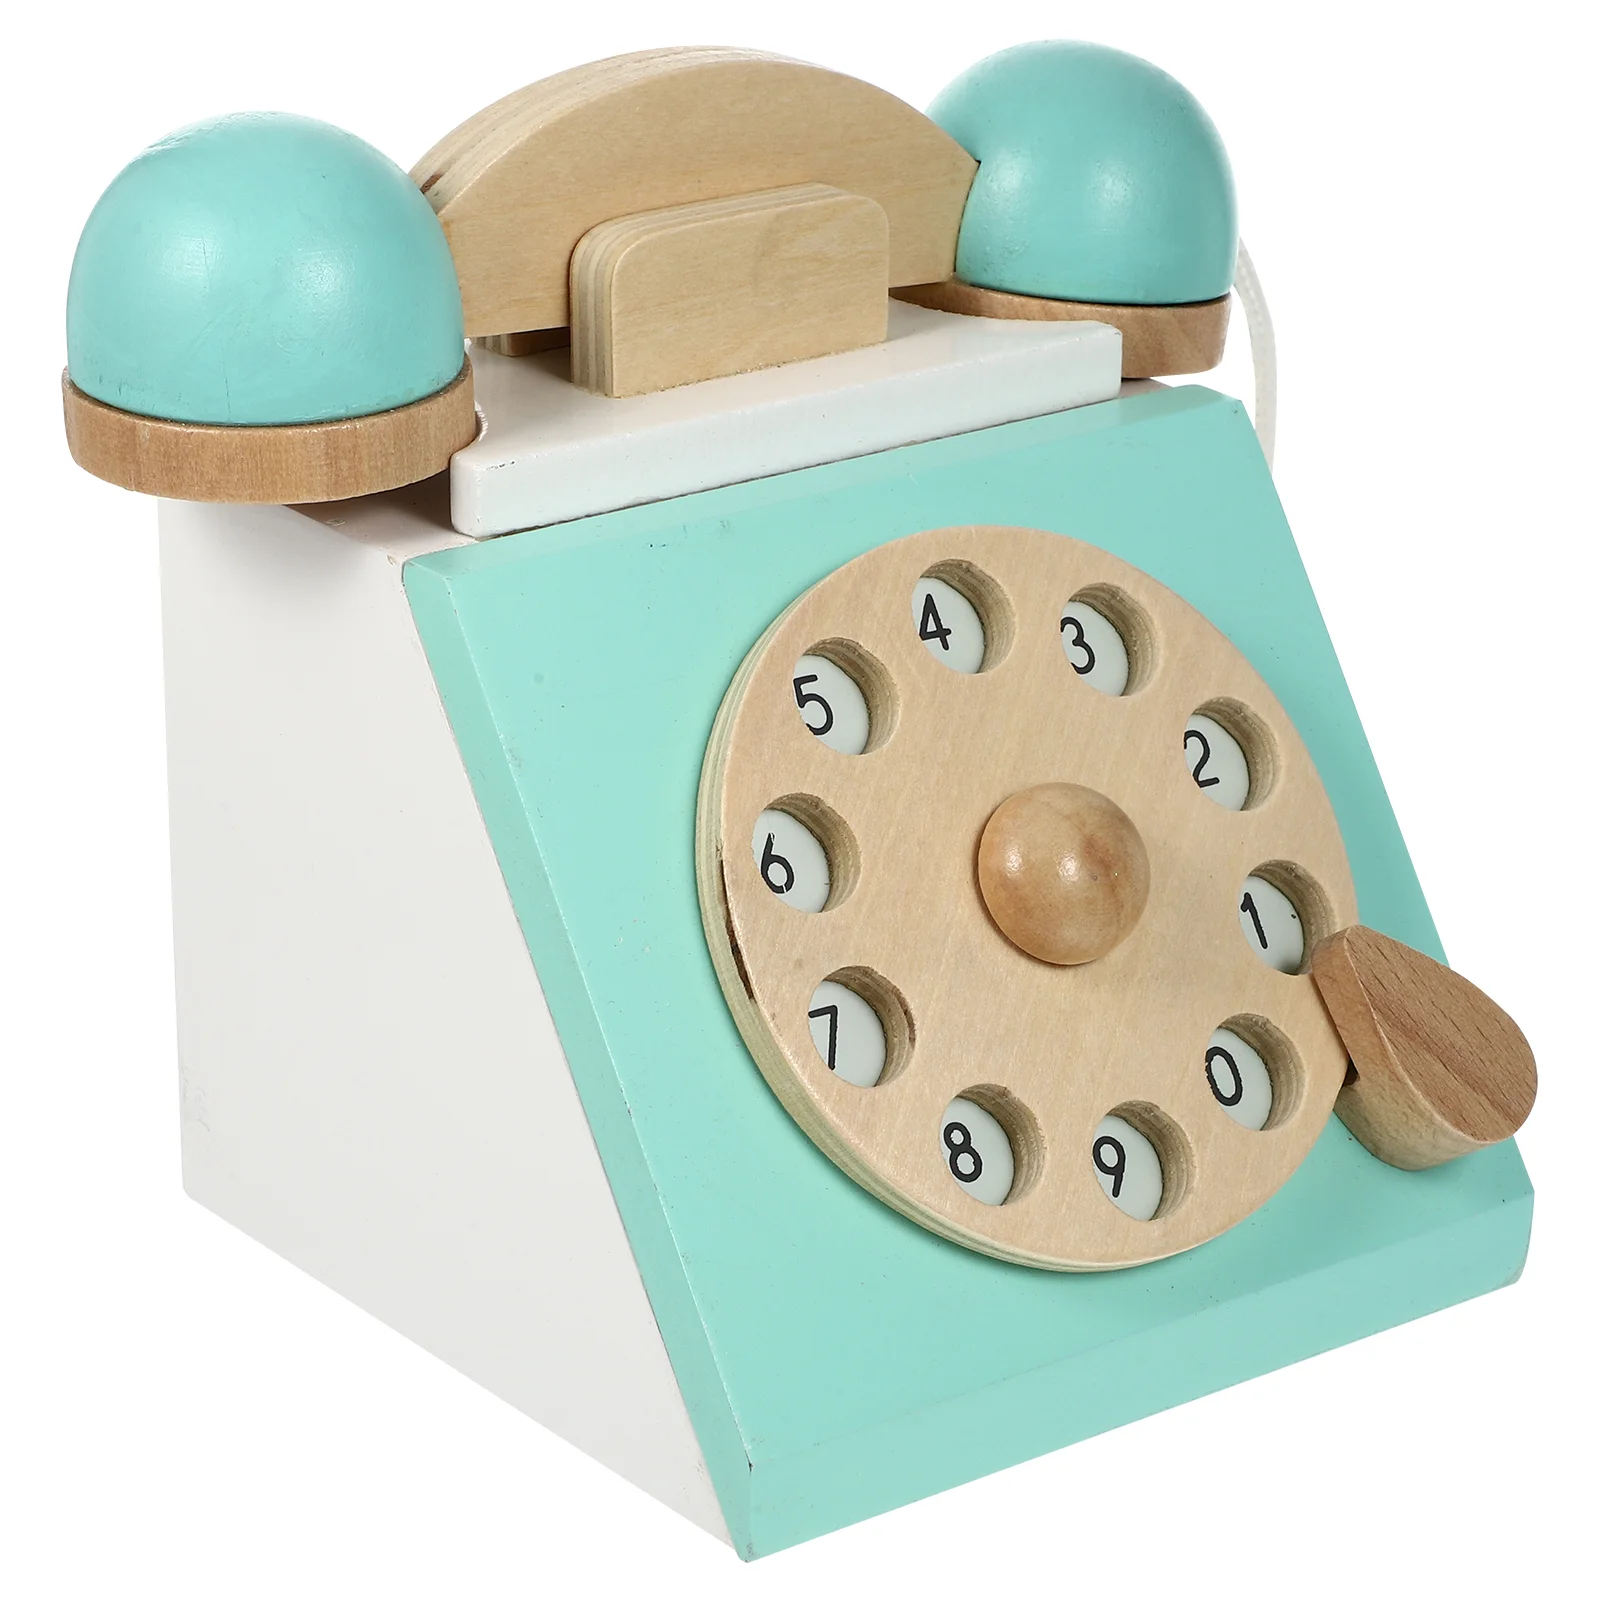 Teléfono de madera de dibujos animados, decoración Vintage para padres e hijos, juguetes educativos para niñas, cognitivos